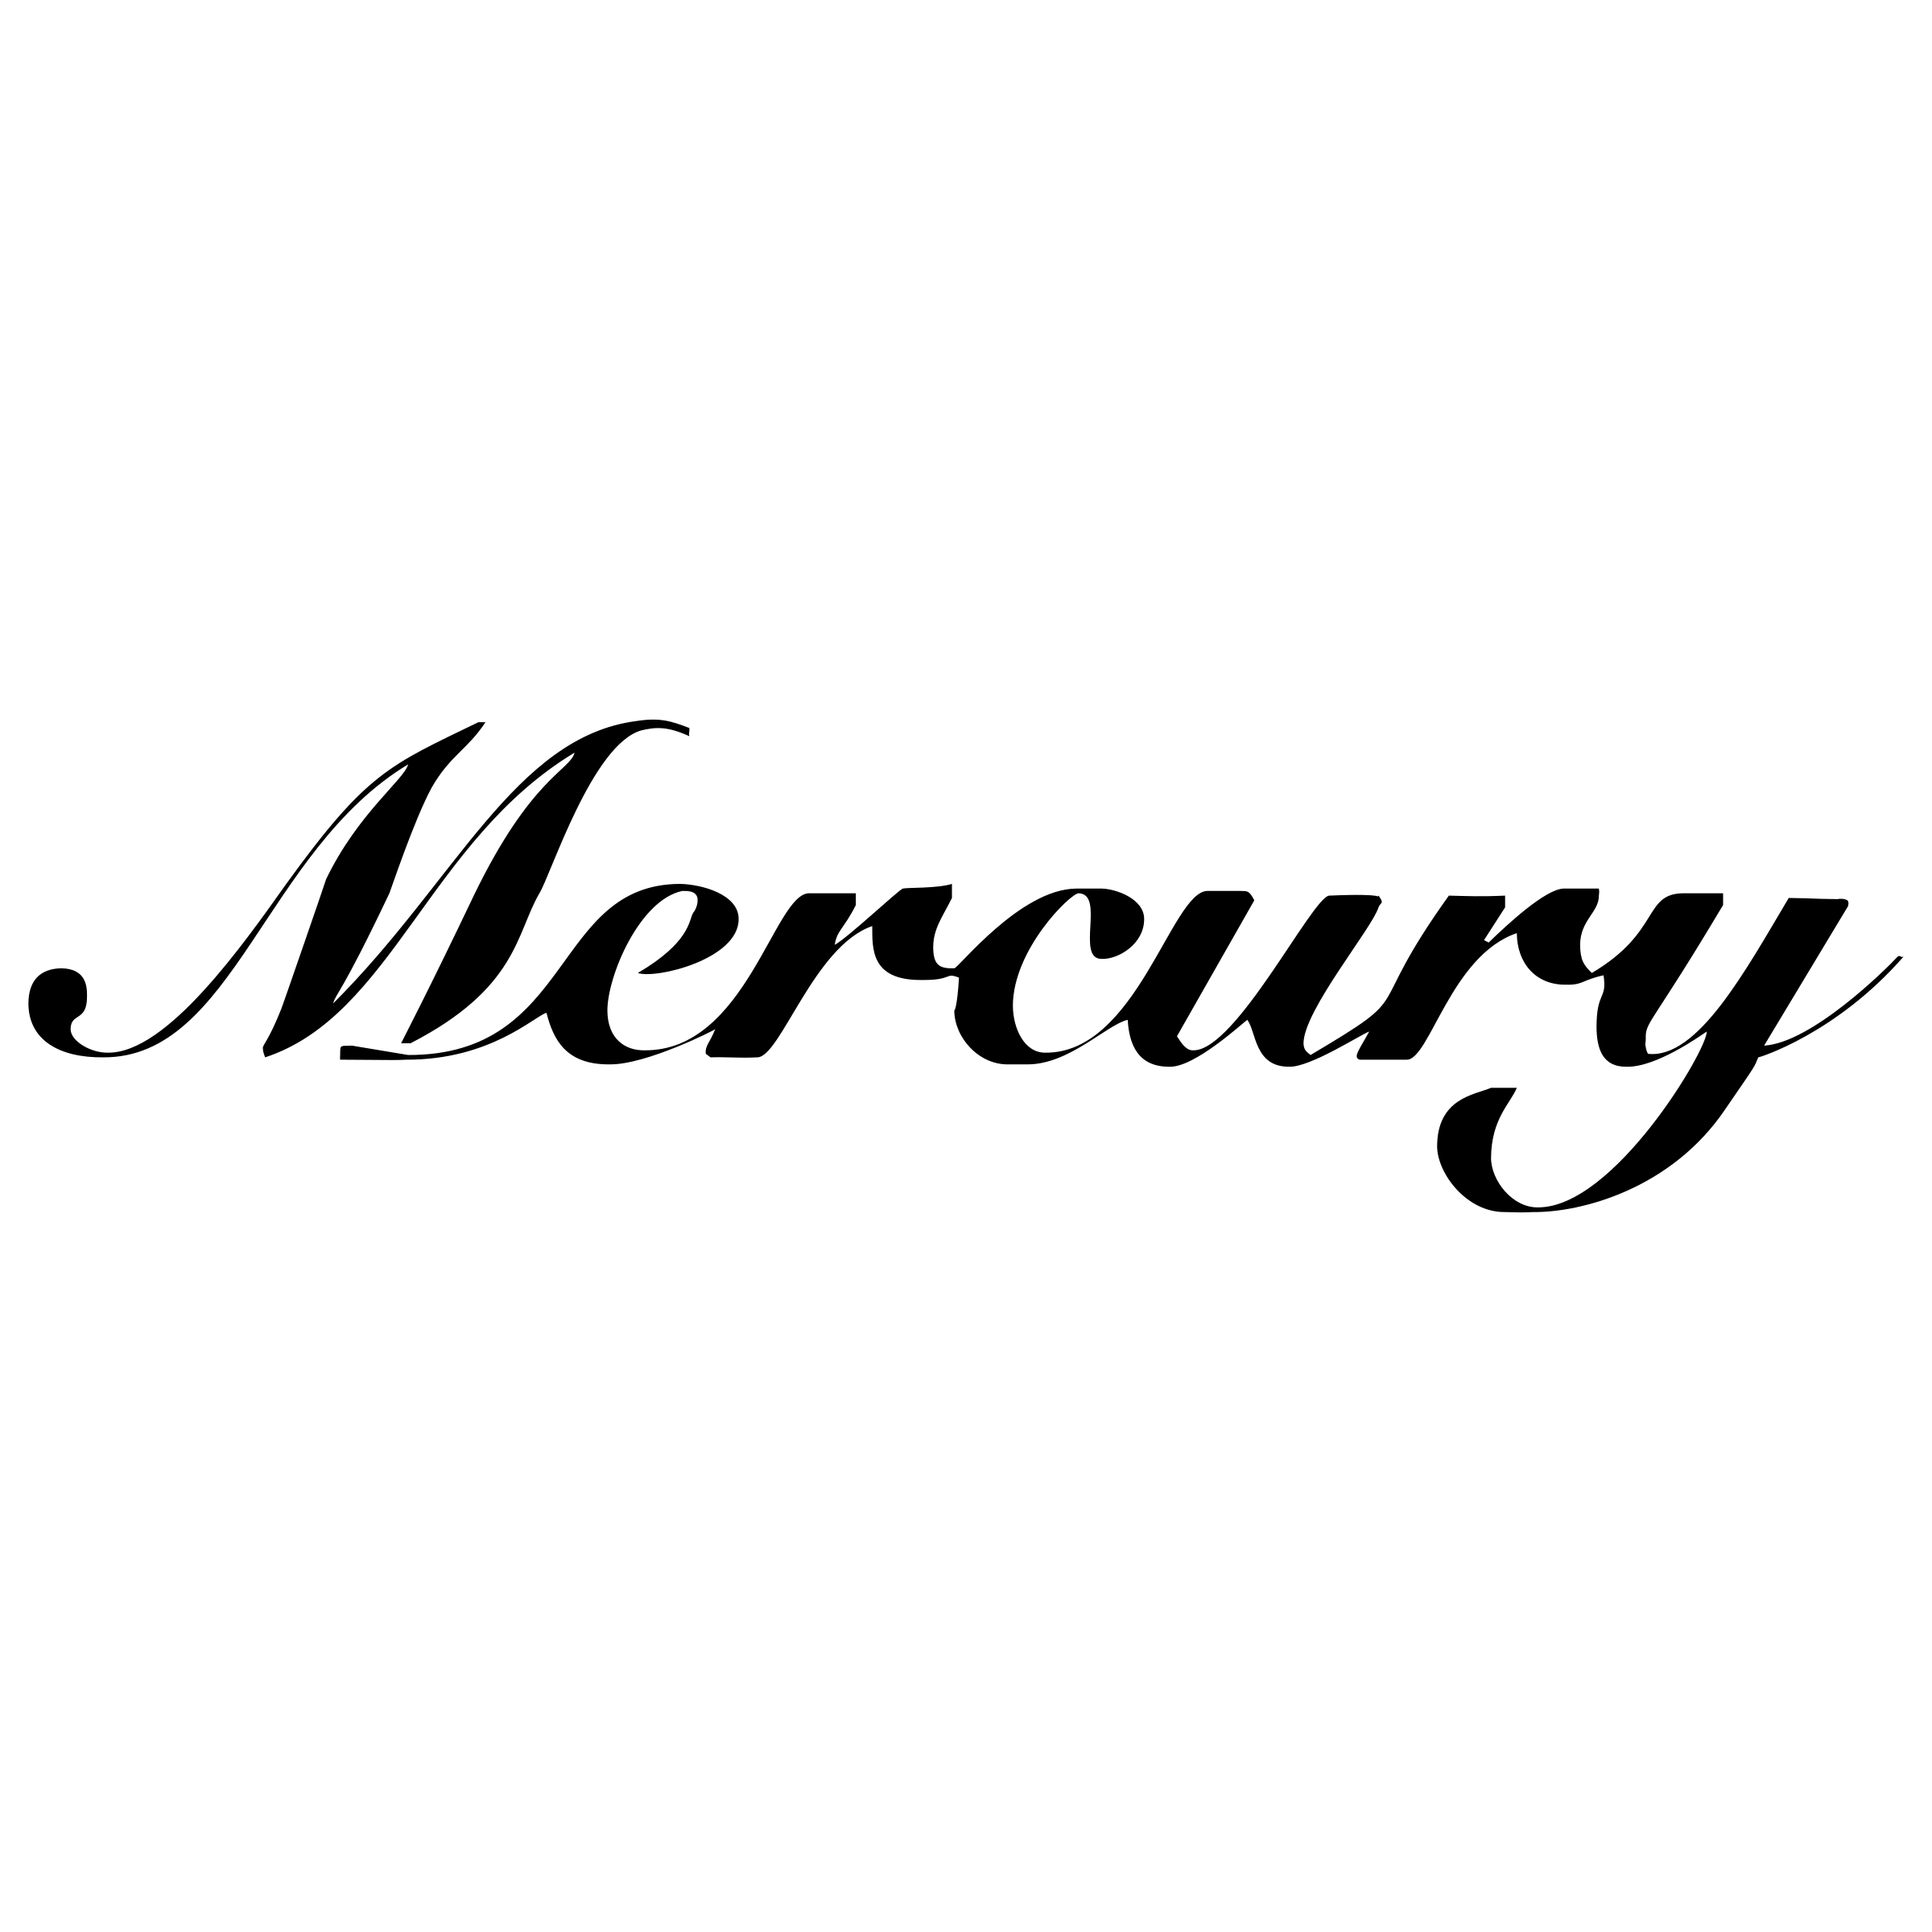 Mercury Logo - Mercury Logo PNG Transparent & SVG Vector - Freebie Supply